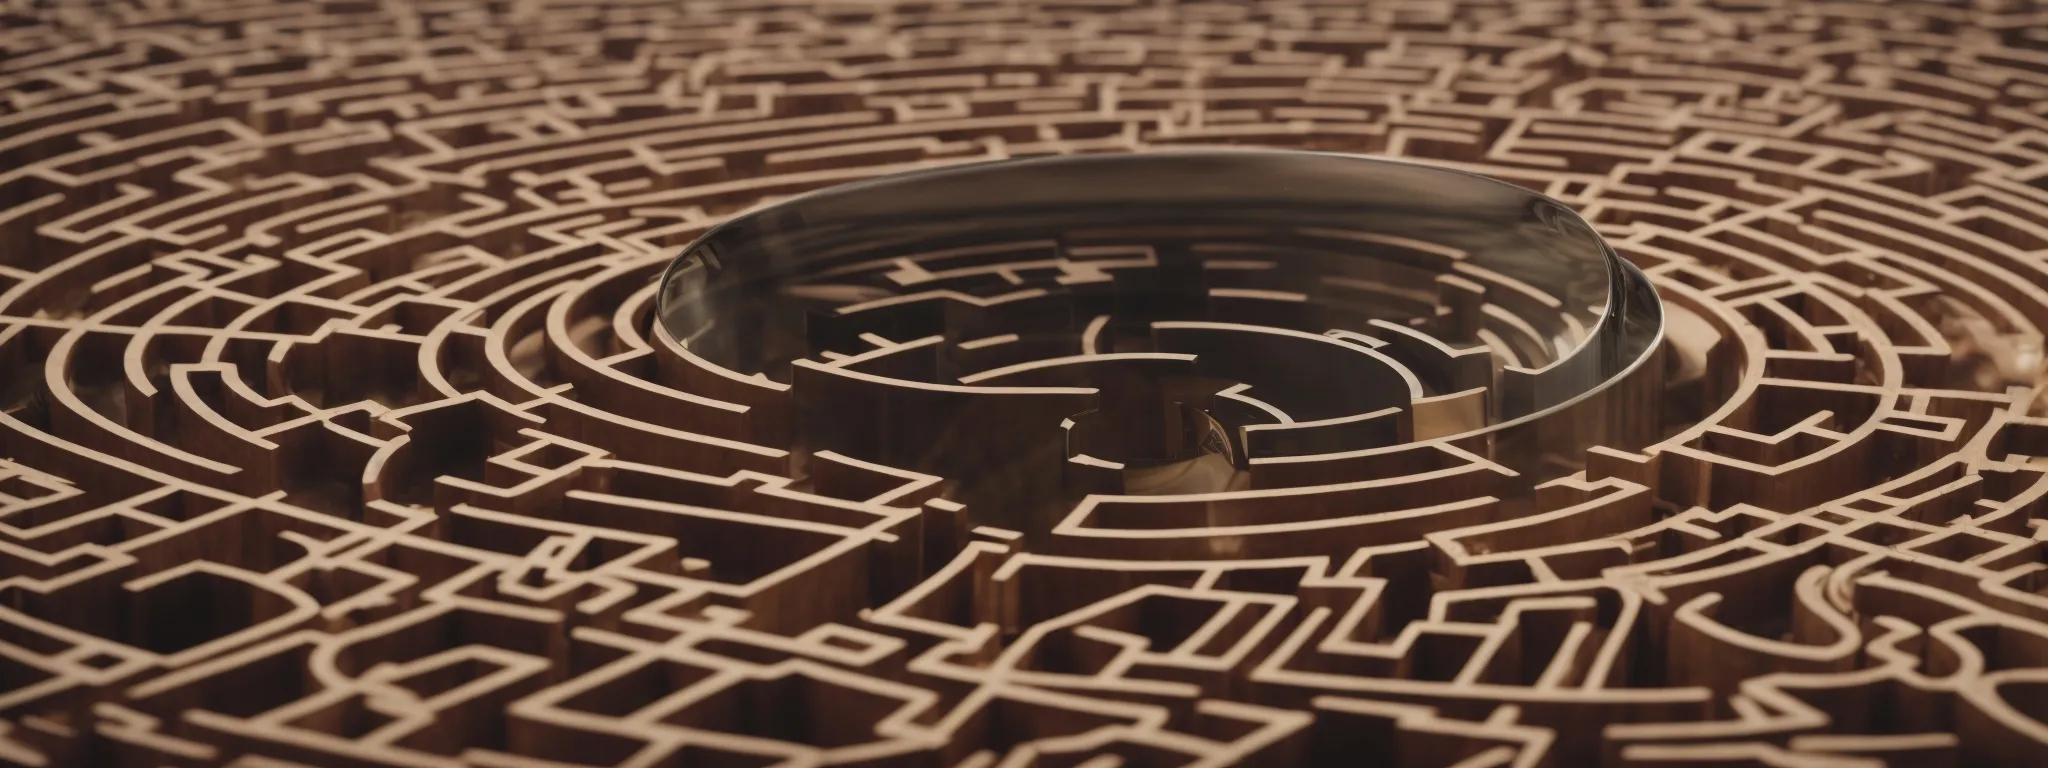 a magnifying glass hovering over a complex maze, symbolizing strategic navigation.